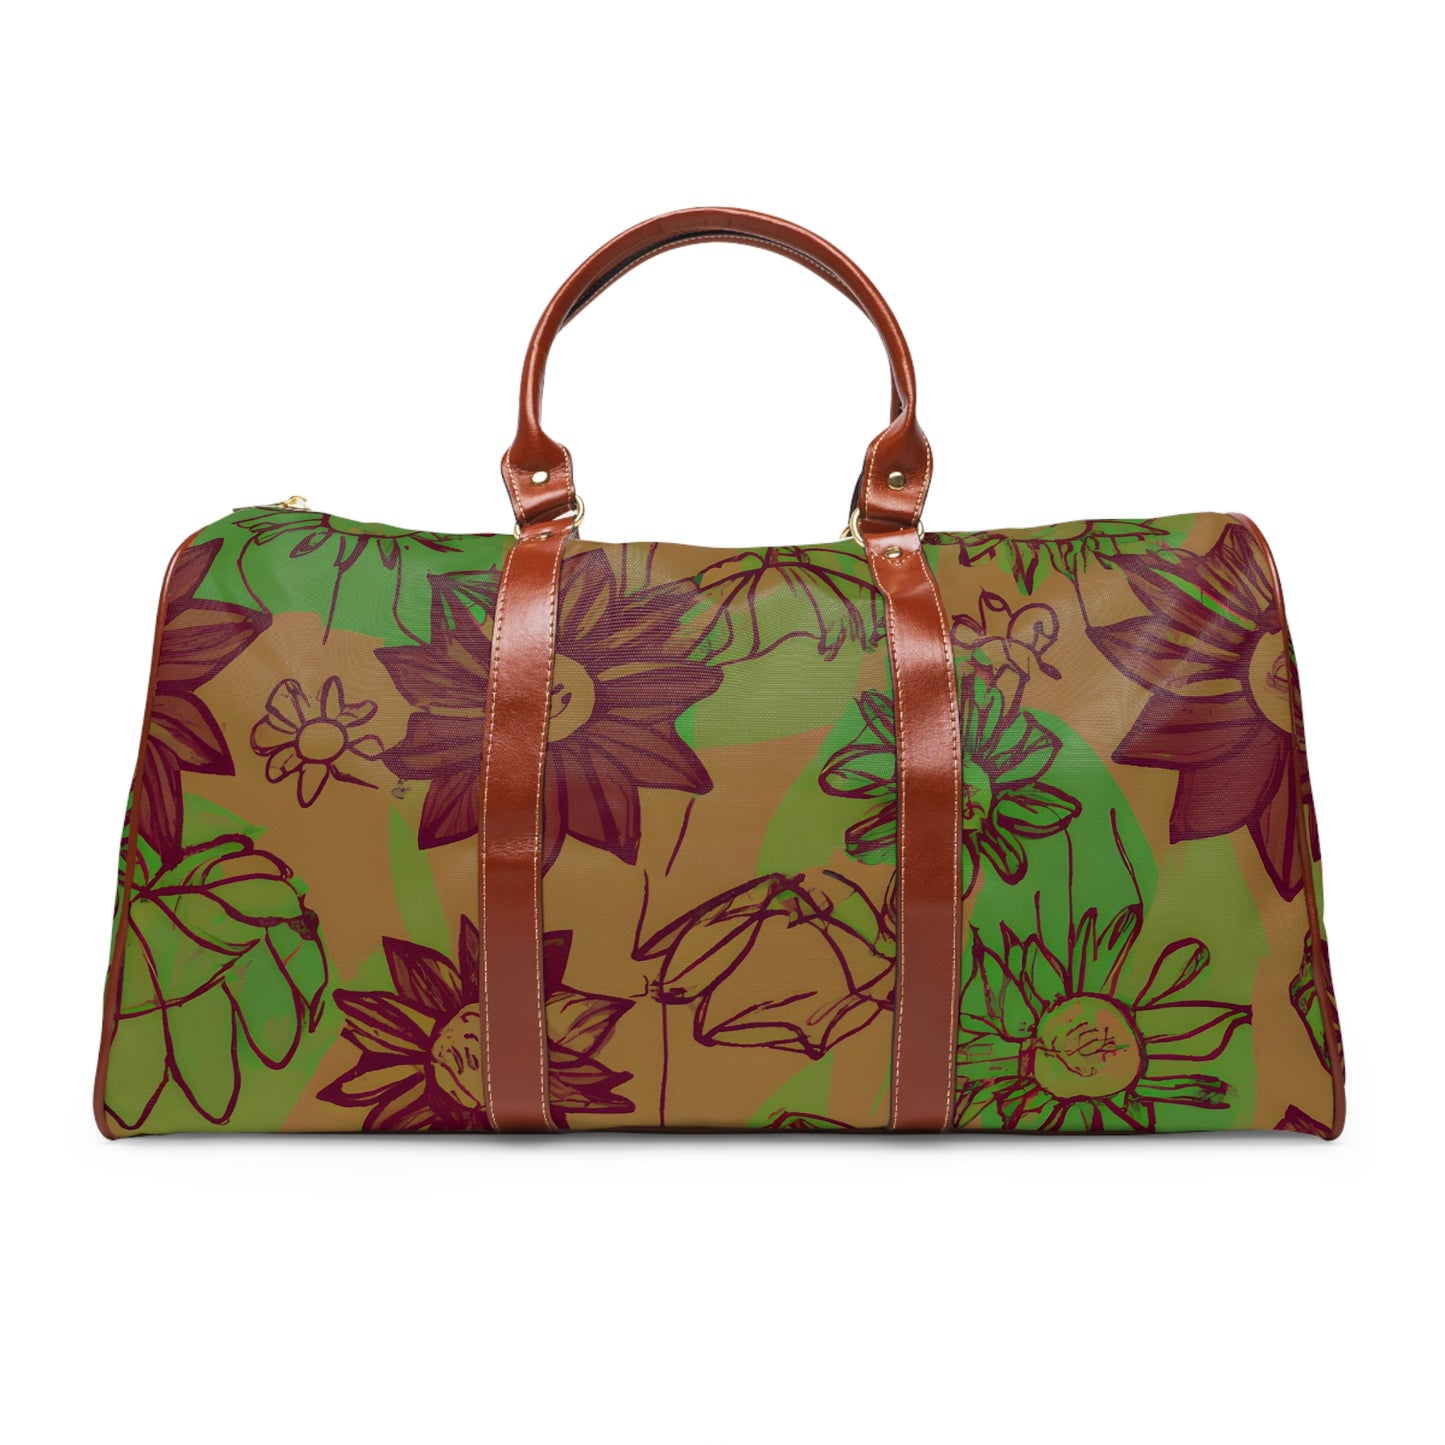 Planda Larry - Water-resistant Travel Bag